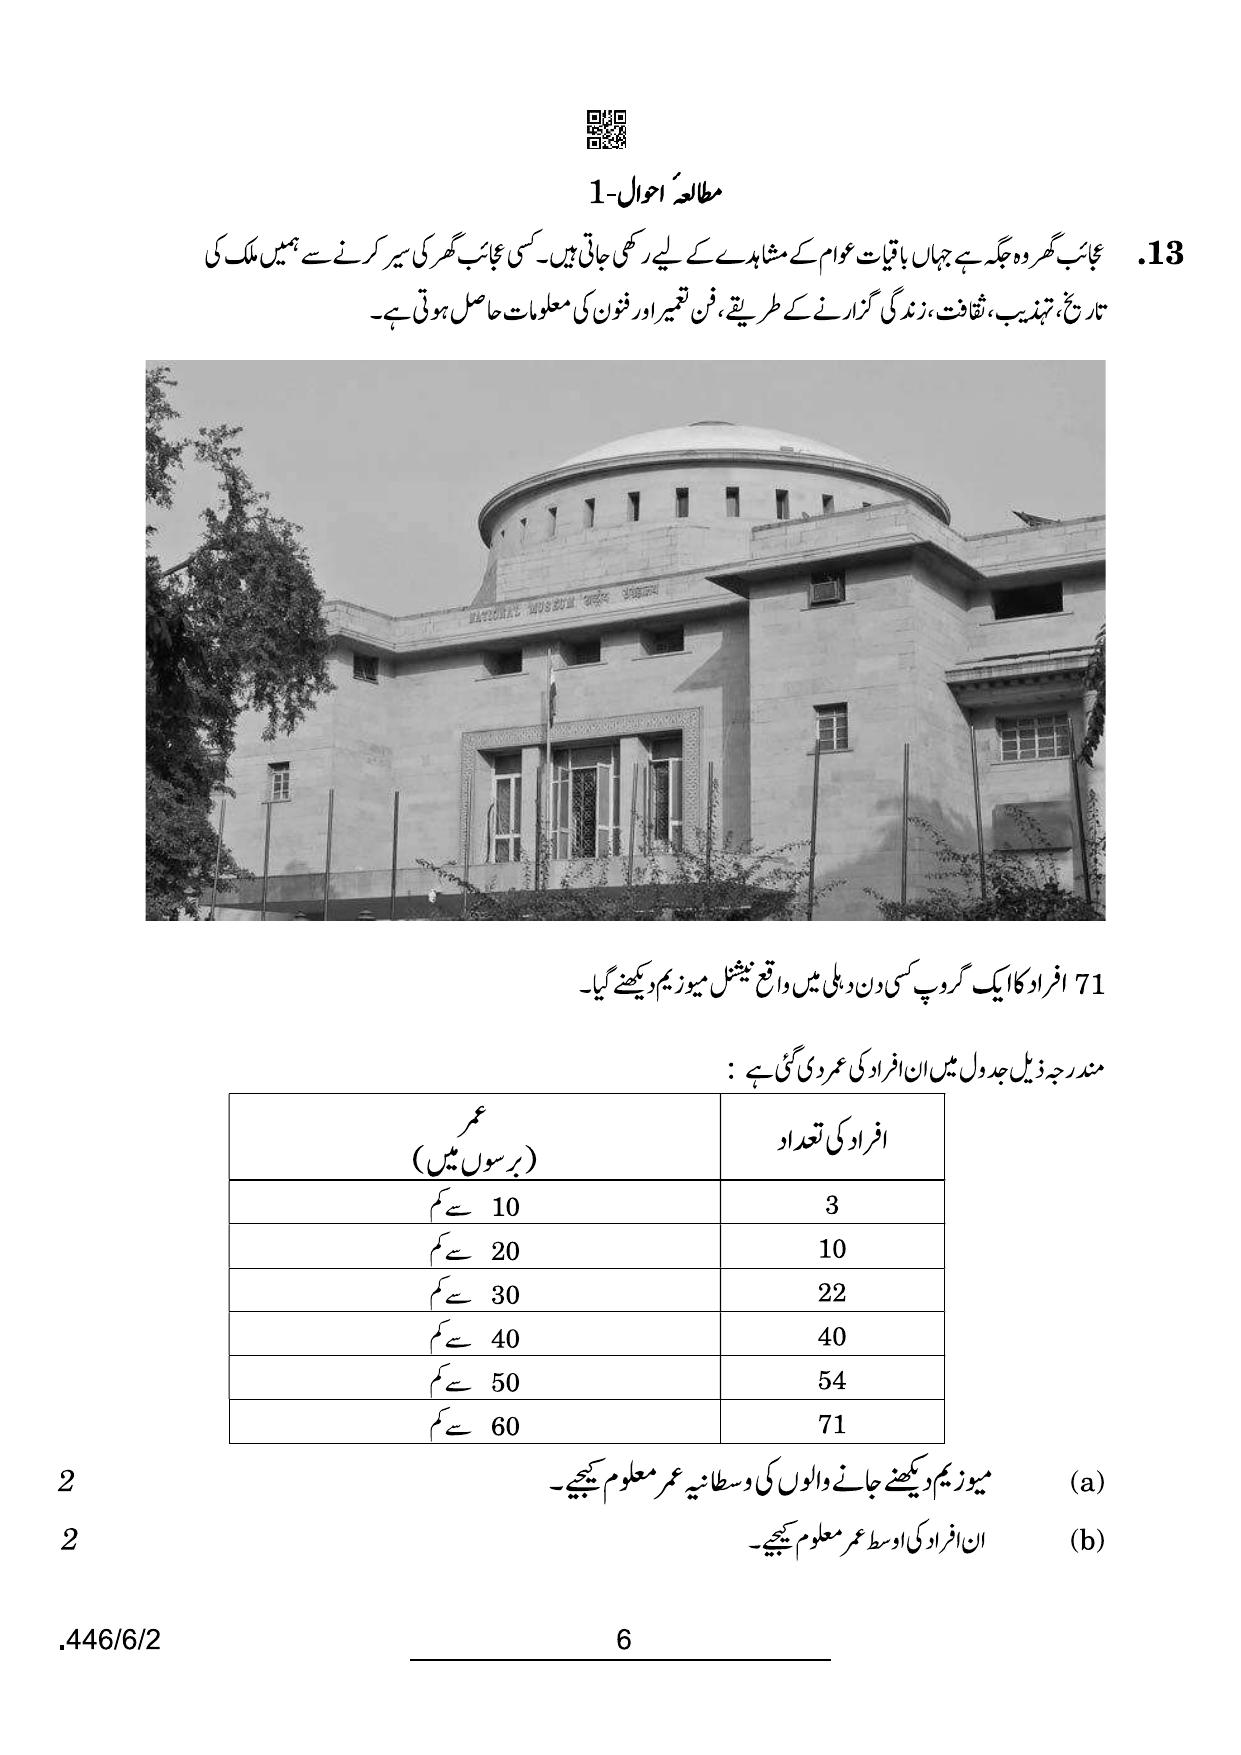 CBSE Class 10 446-6-2 Maths Basic Urdu 2022 Compartment Question Paper - Page 6